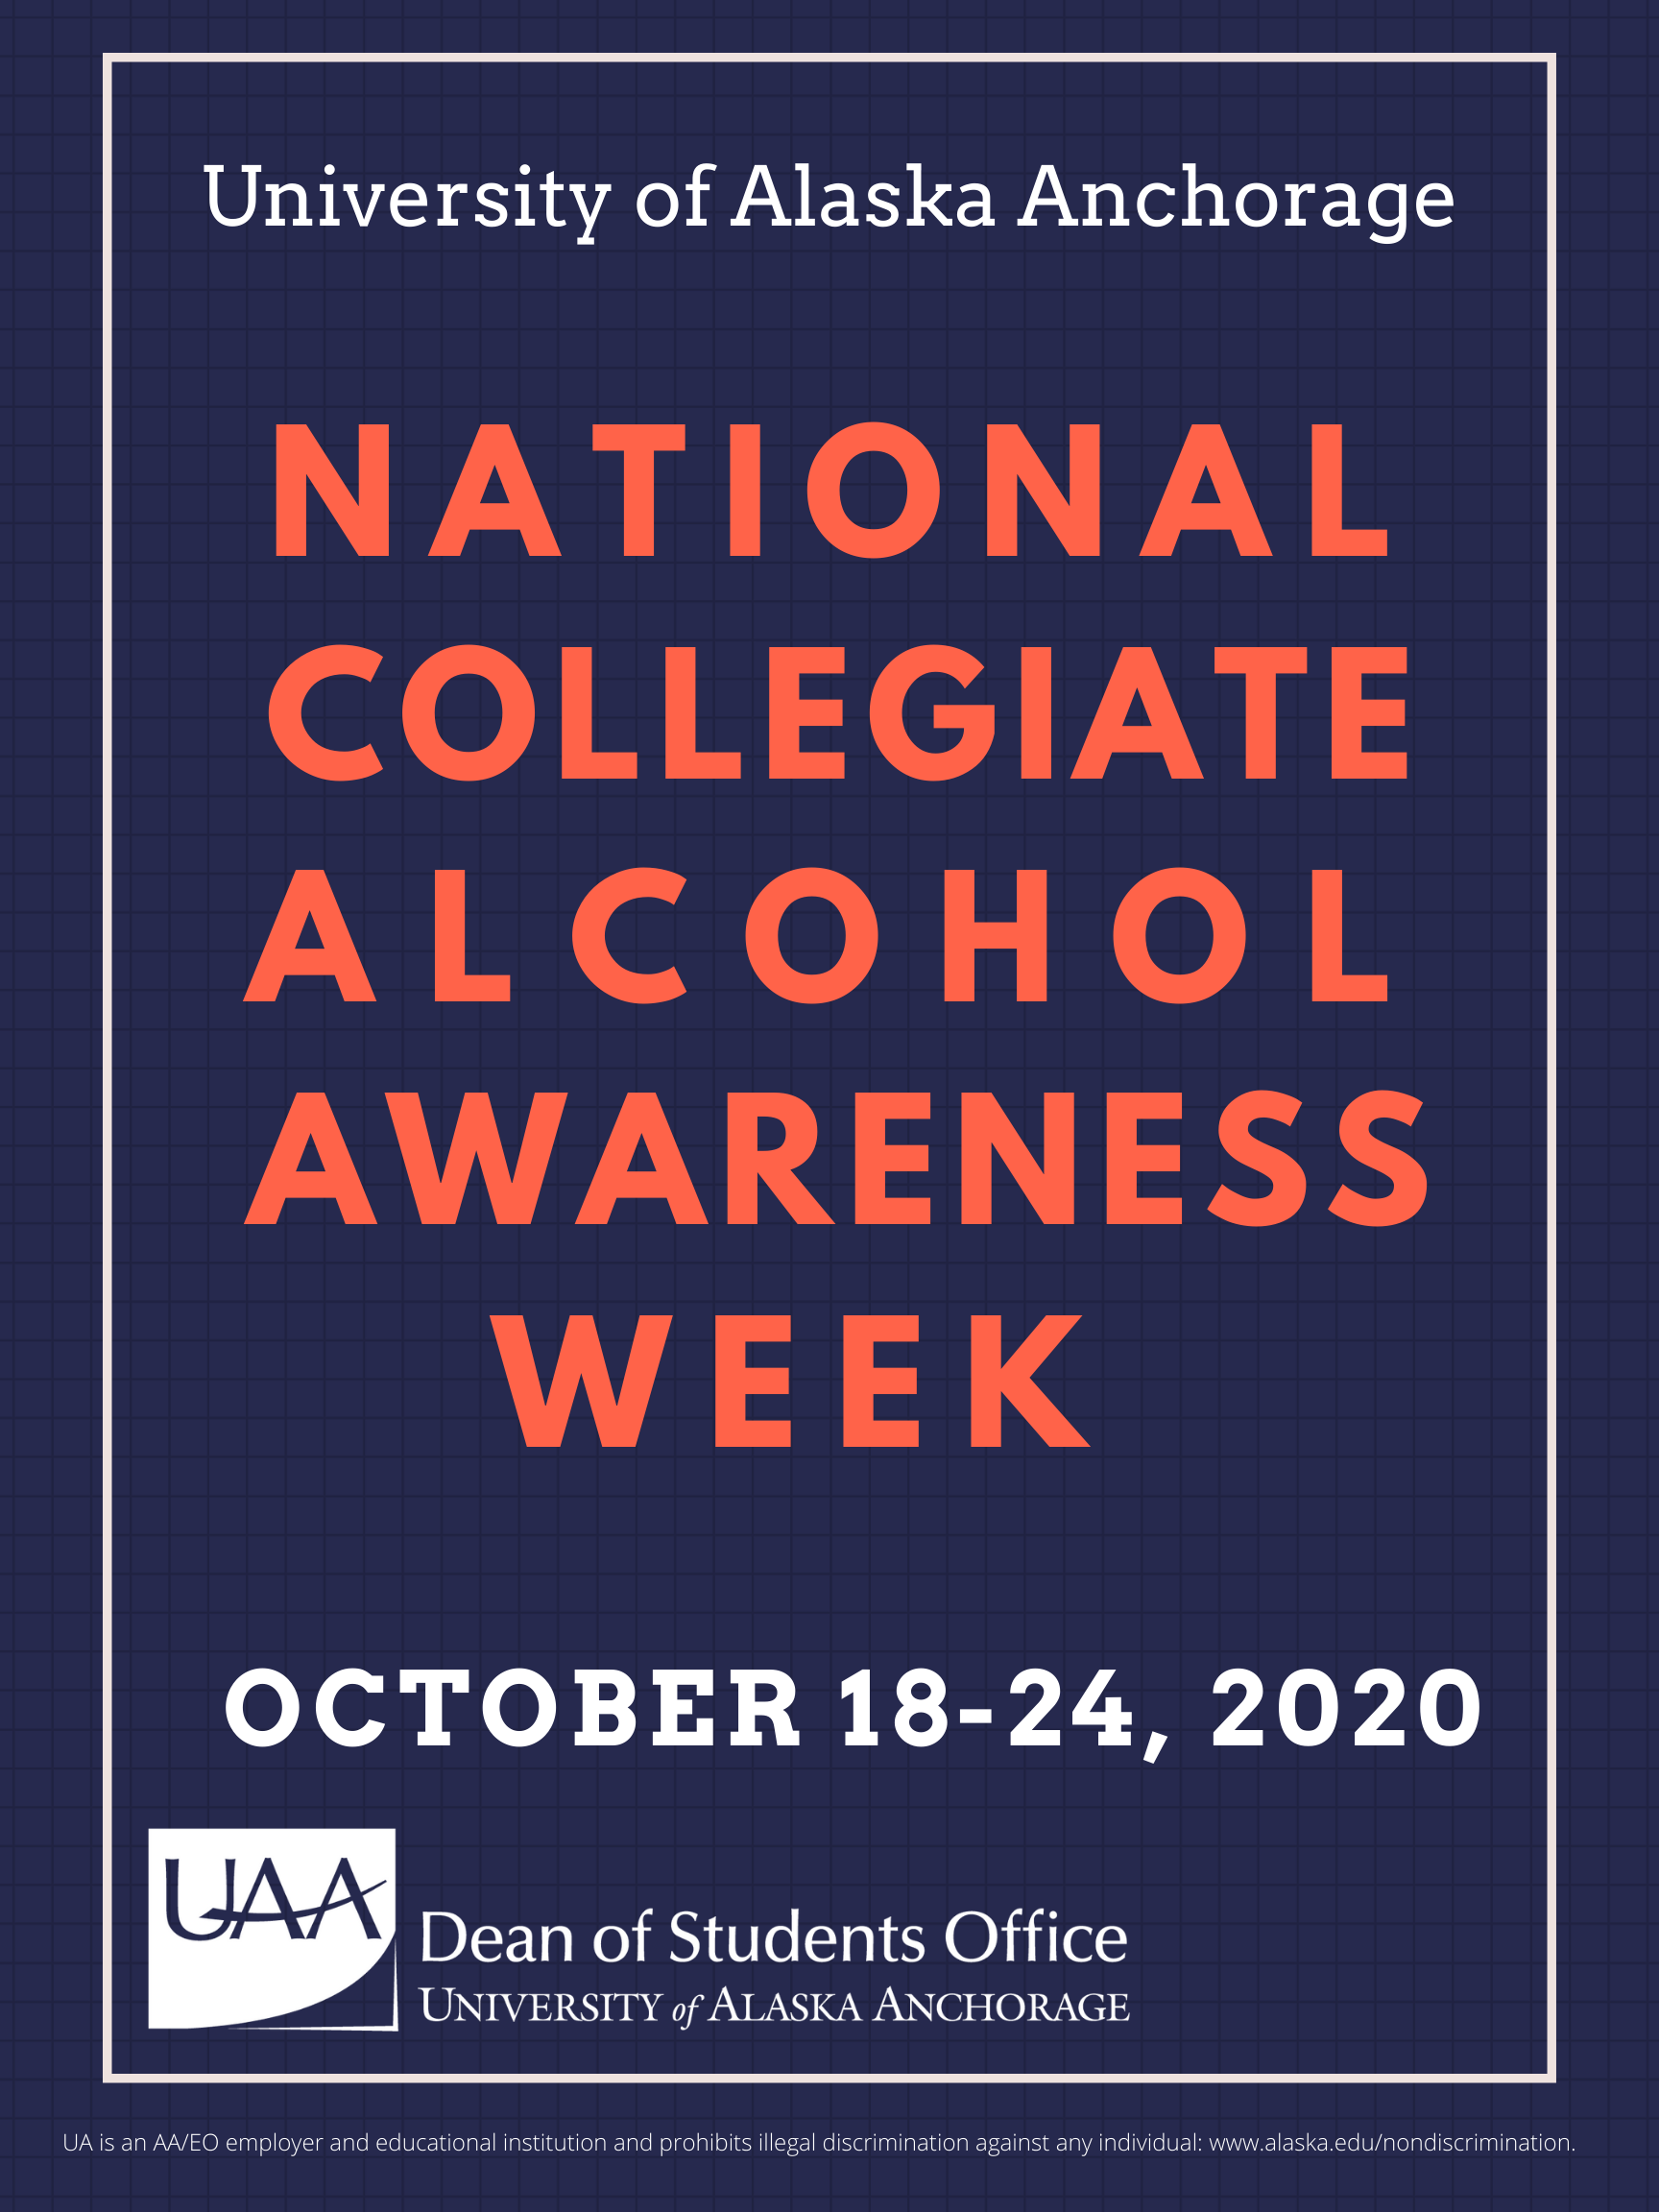 National Collegiate Alcohol Awareness Week at UAA poster